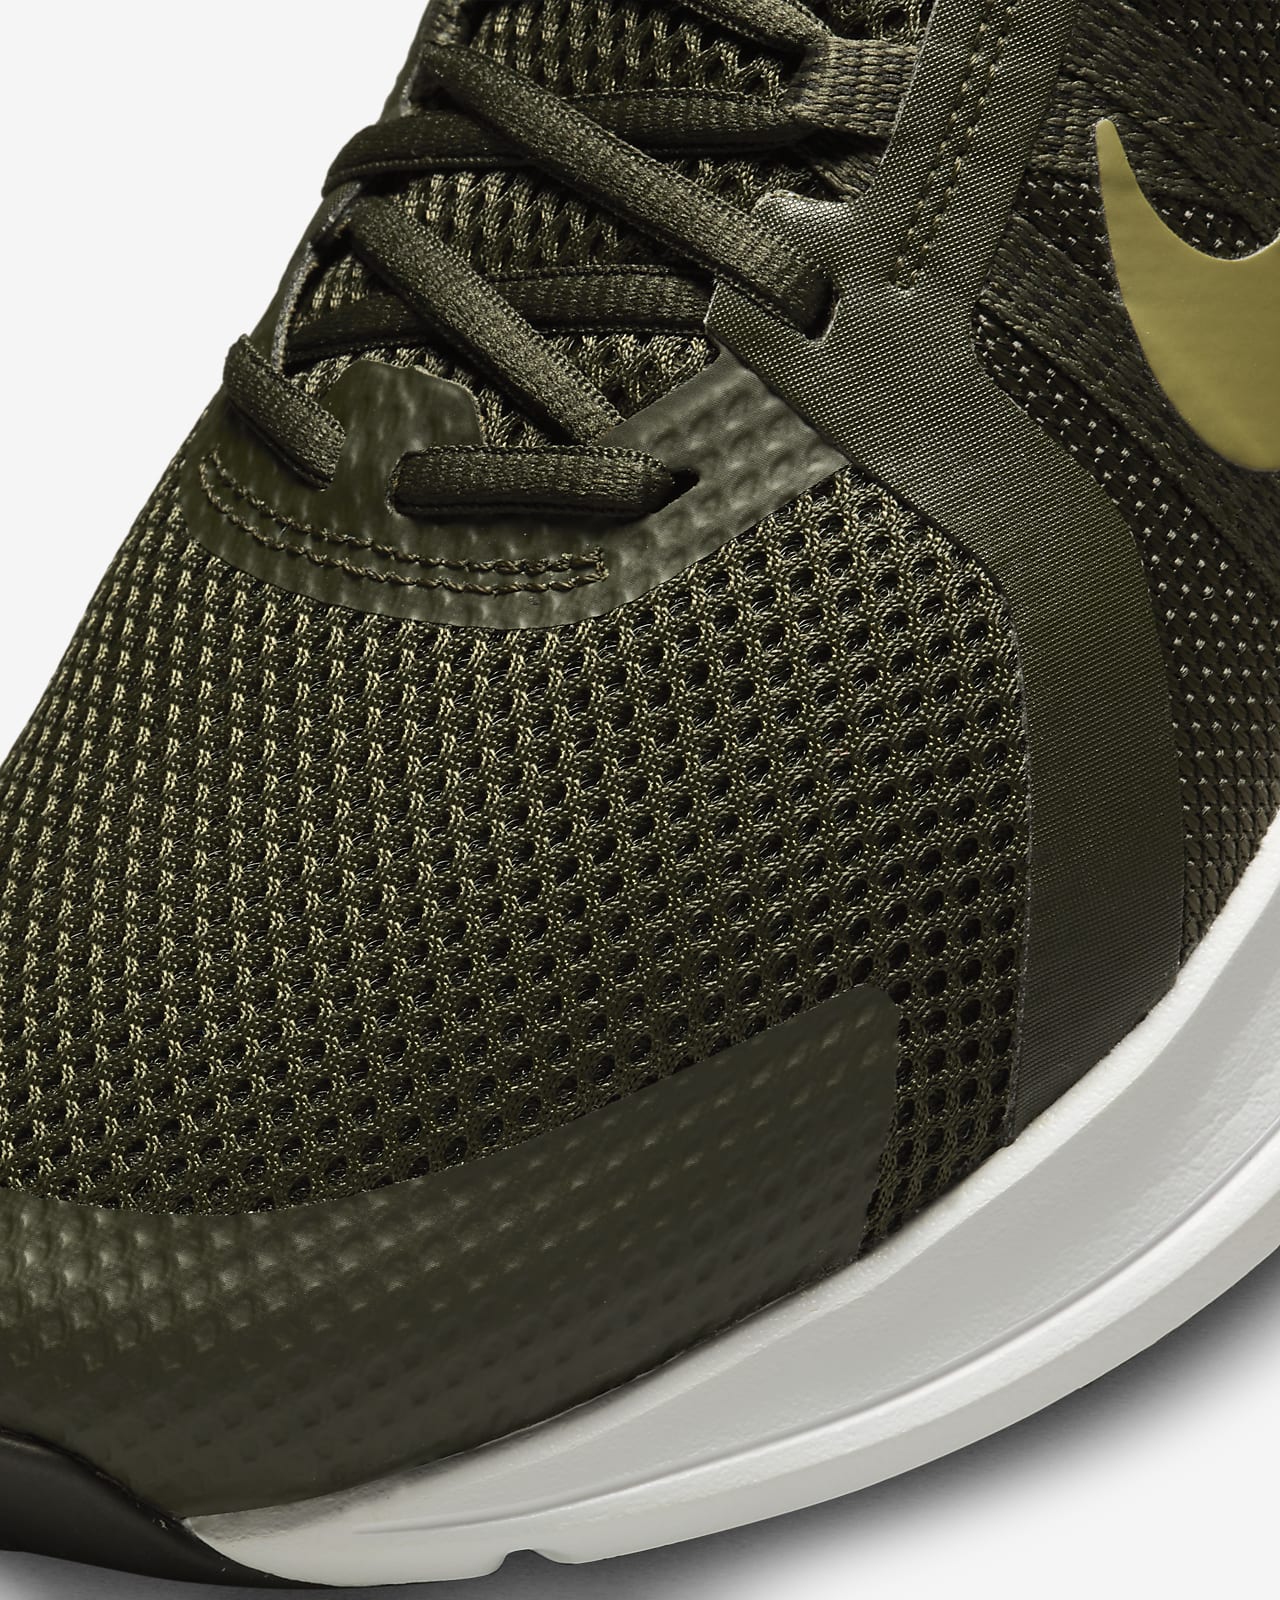 Decimal Realmente cuchara Nike Run Swift 2 Men's Road Running Shoes (Extra Wide). Nike.com